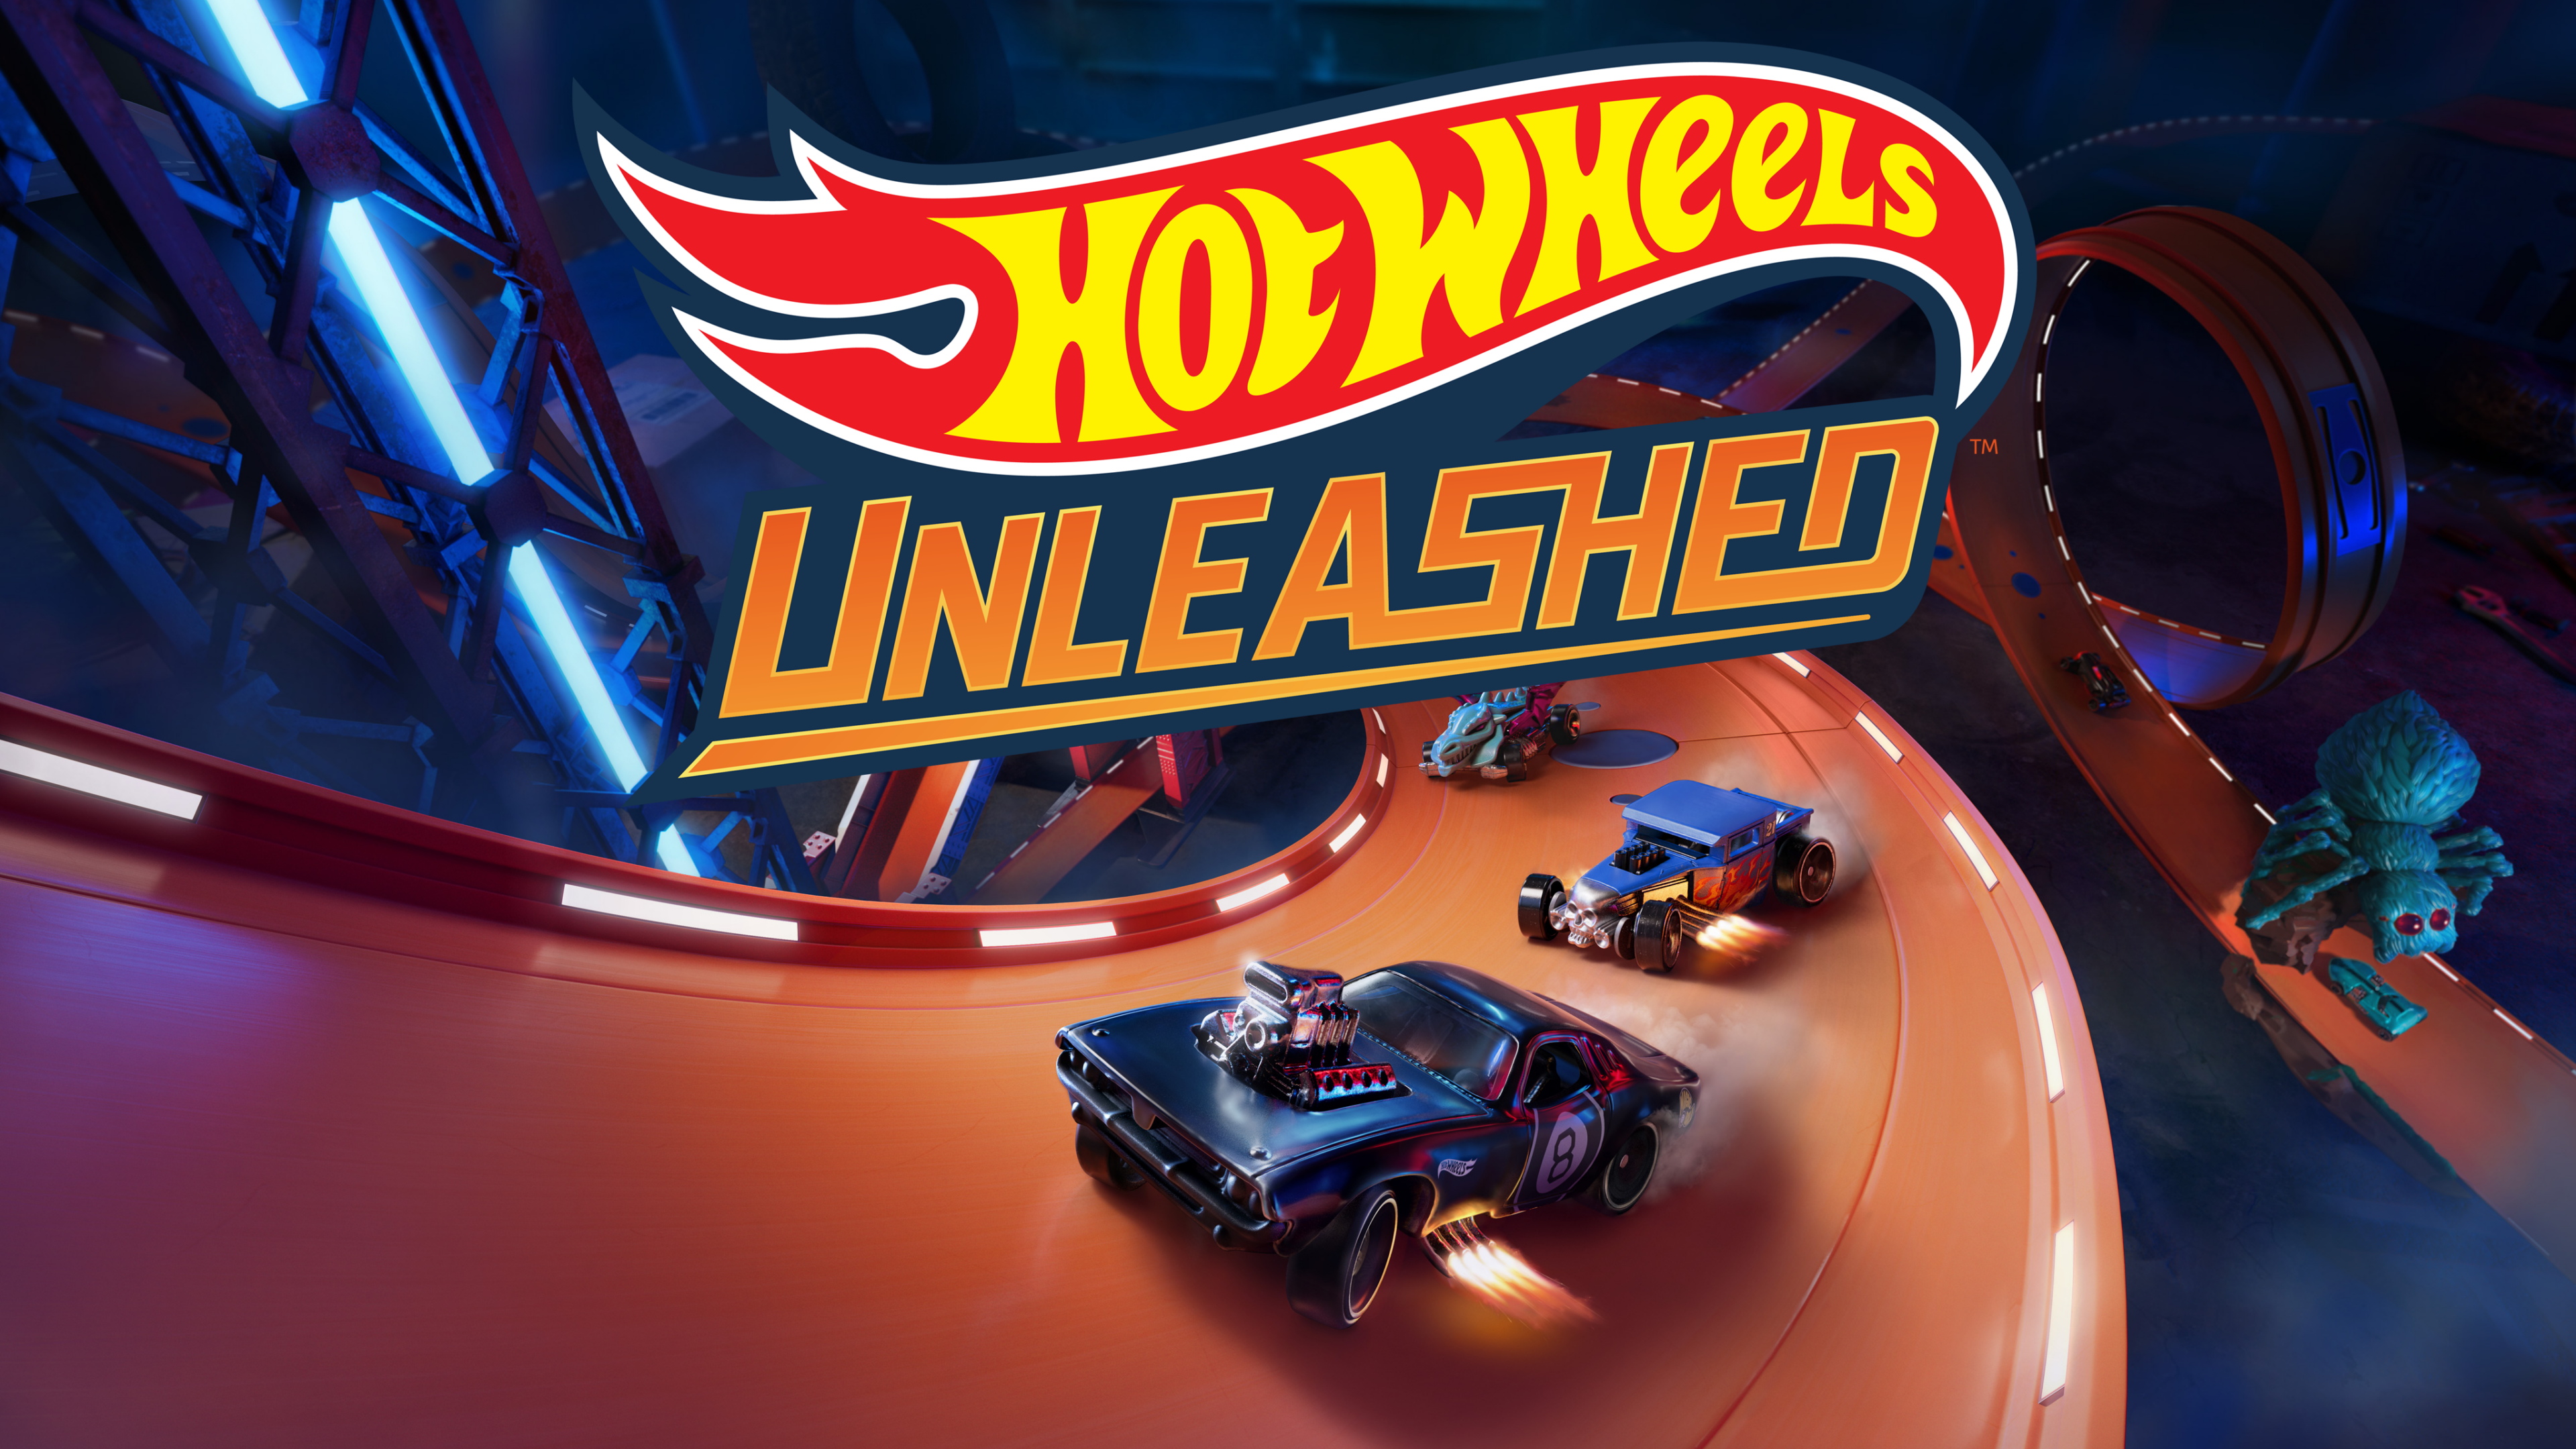 Sales of Hot Wheels Unleashed cross 2 million copies